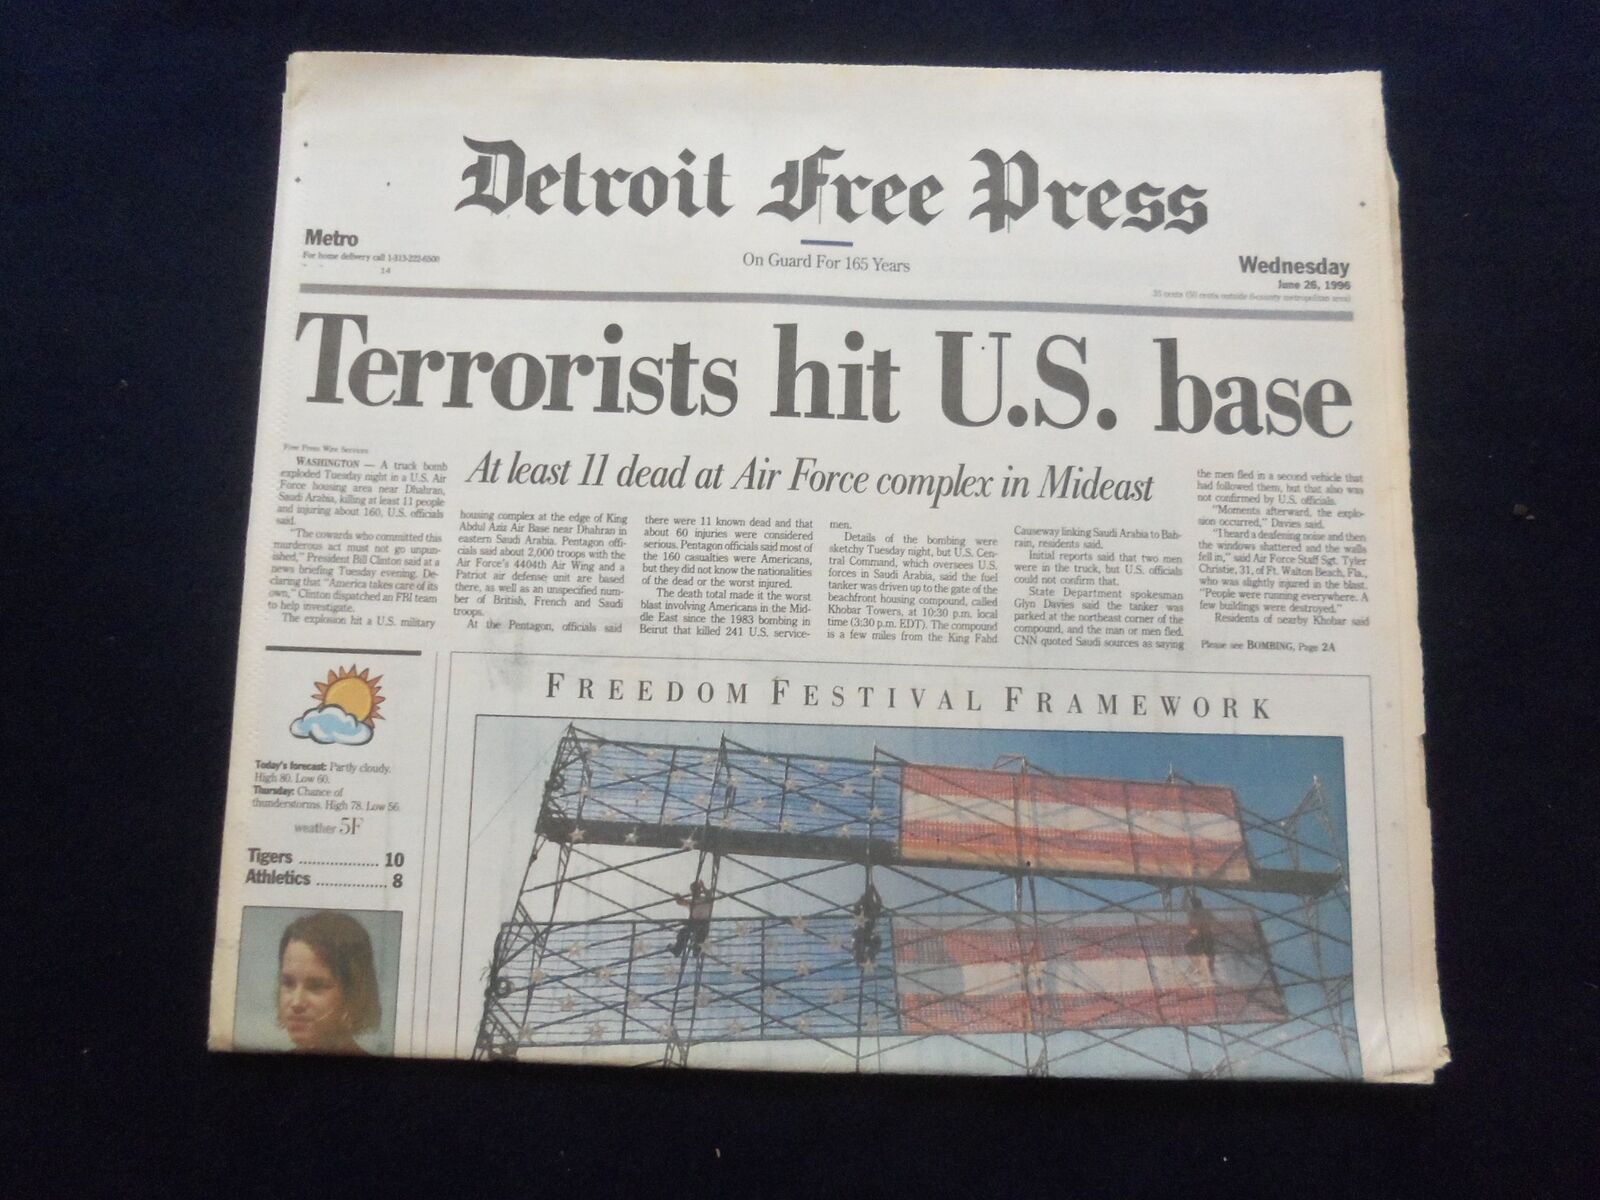 1996 JUNE 26 DETROIT FREE PRESS NEWSPAPER - TERRORISTS HIT U.S. BASE - NP 7262